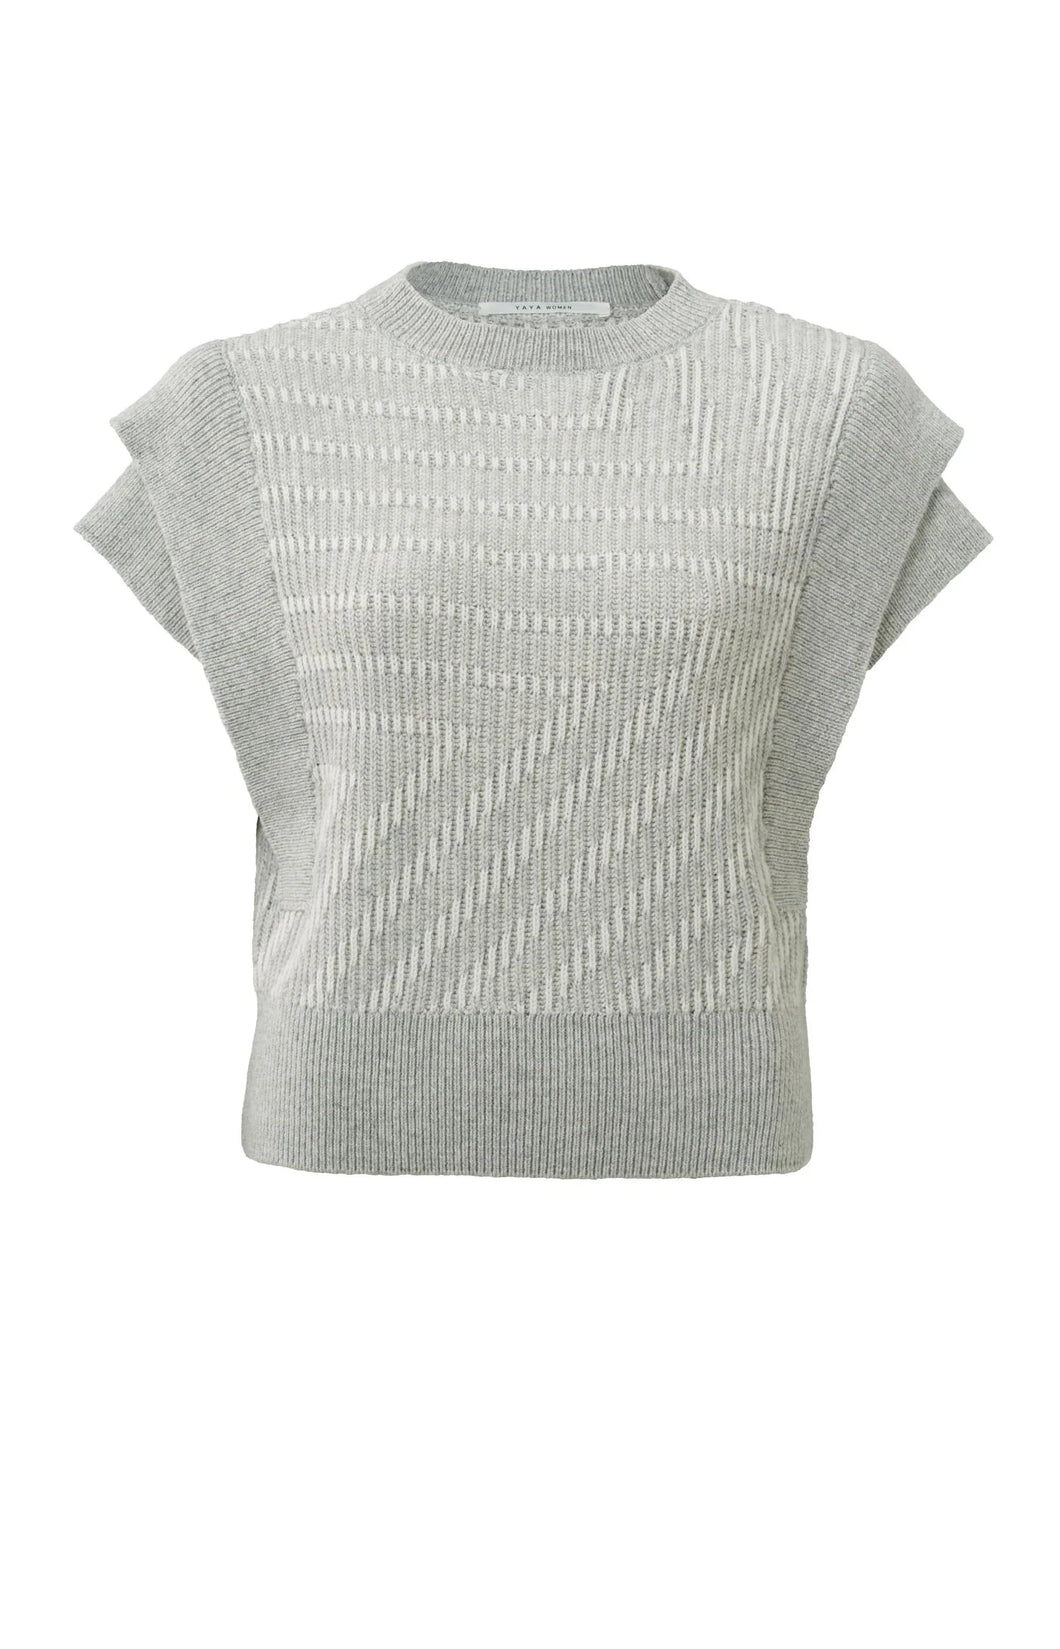 Yaya Sleeveless Sweater Northern Droplet Grey 01-000267-307